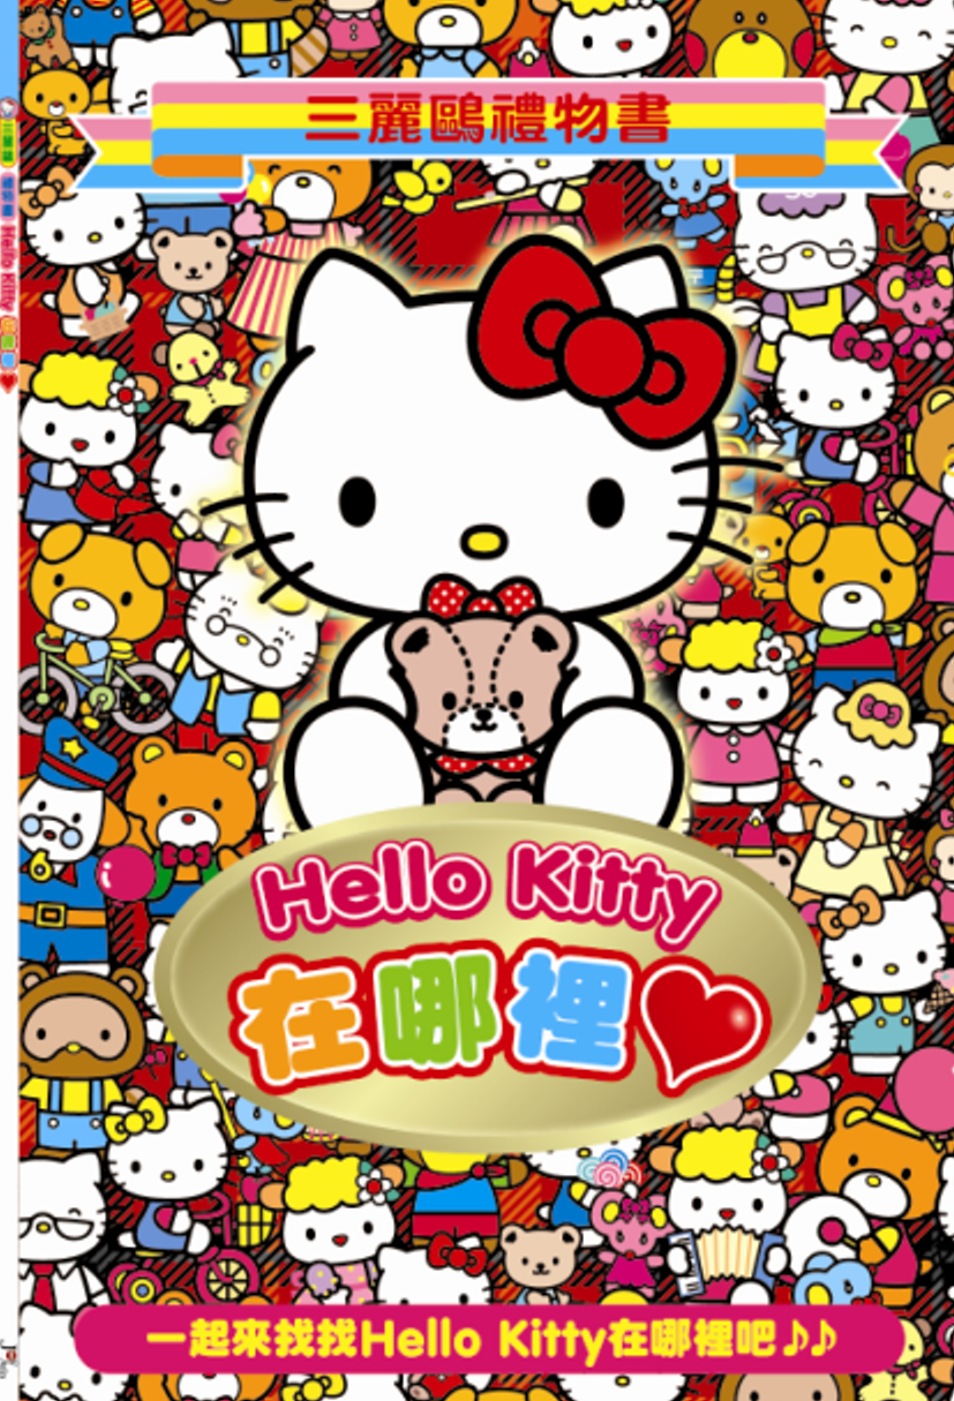 Hello Kitty在哪裡？